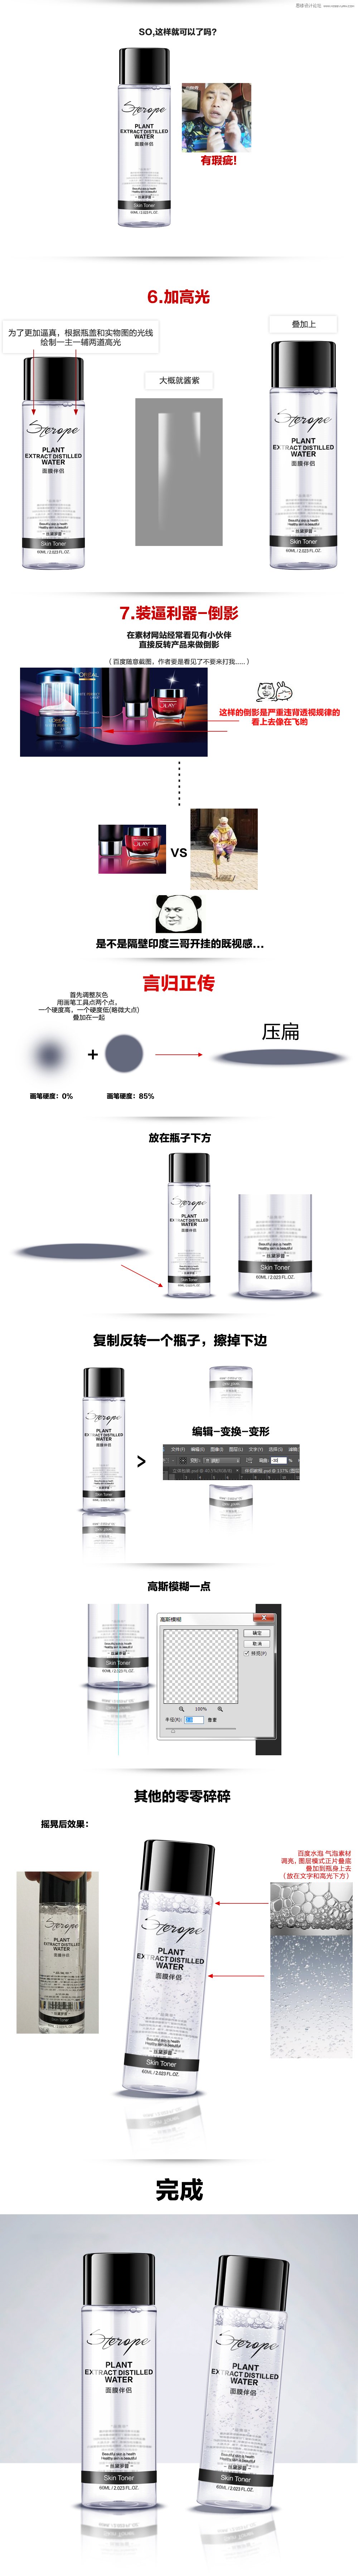 Photoshop详细解析化妆品产品后期的修图教程,PS教程,素材中国网